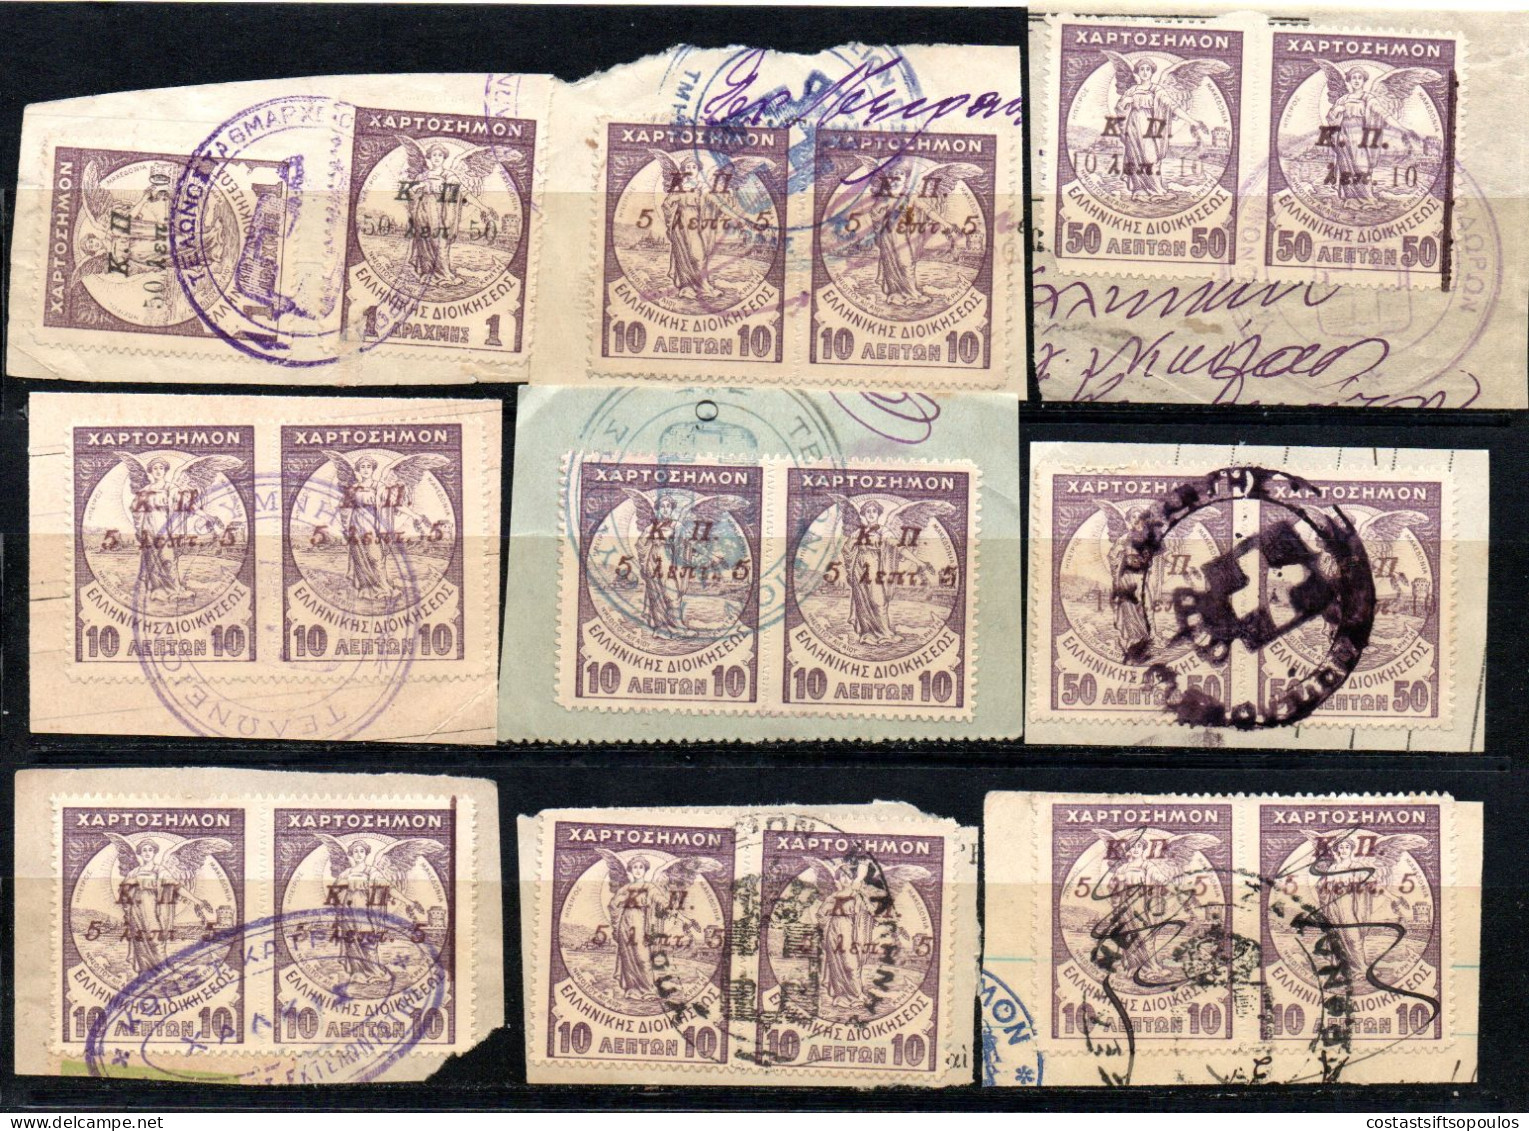 2468. GREECE. 1917 K.Π. REVENUES ON FRAGMENTS, VARIOUS CUSTOMS CANCELS - Revenue Stamps